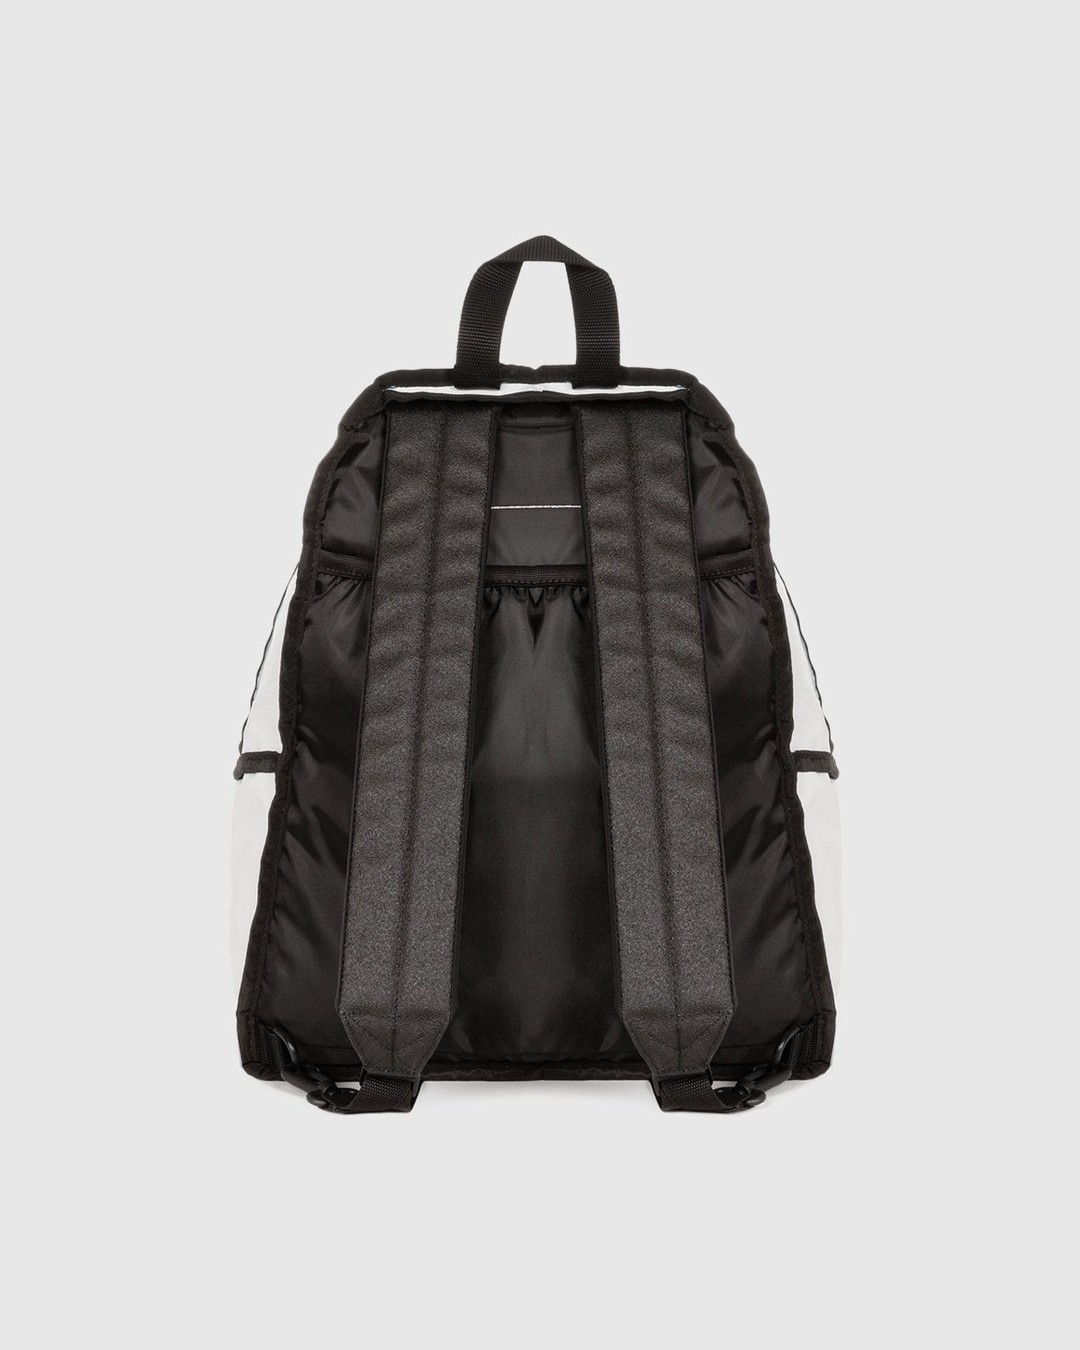 MM6 Maison Margiela x Eastpak – Padded Backpack Black - Backpacks - Black - Image 2